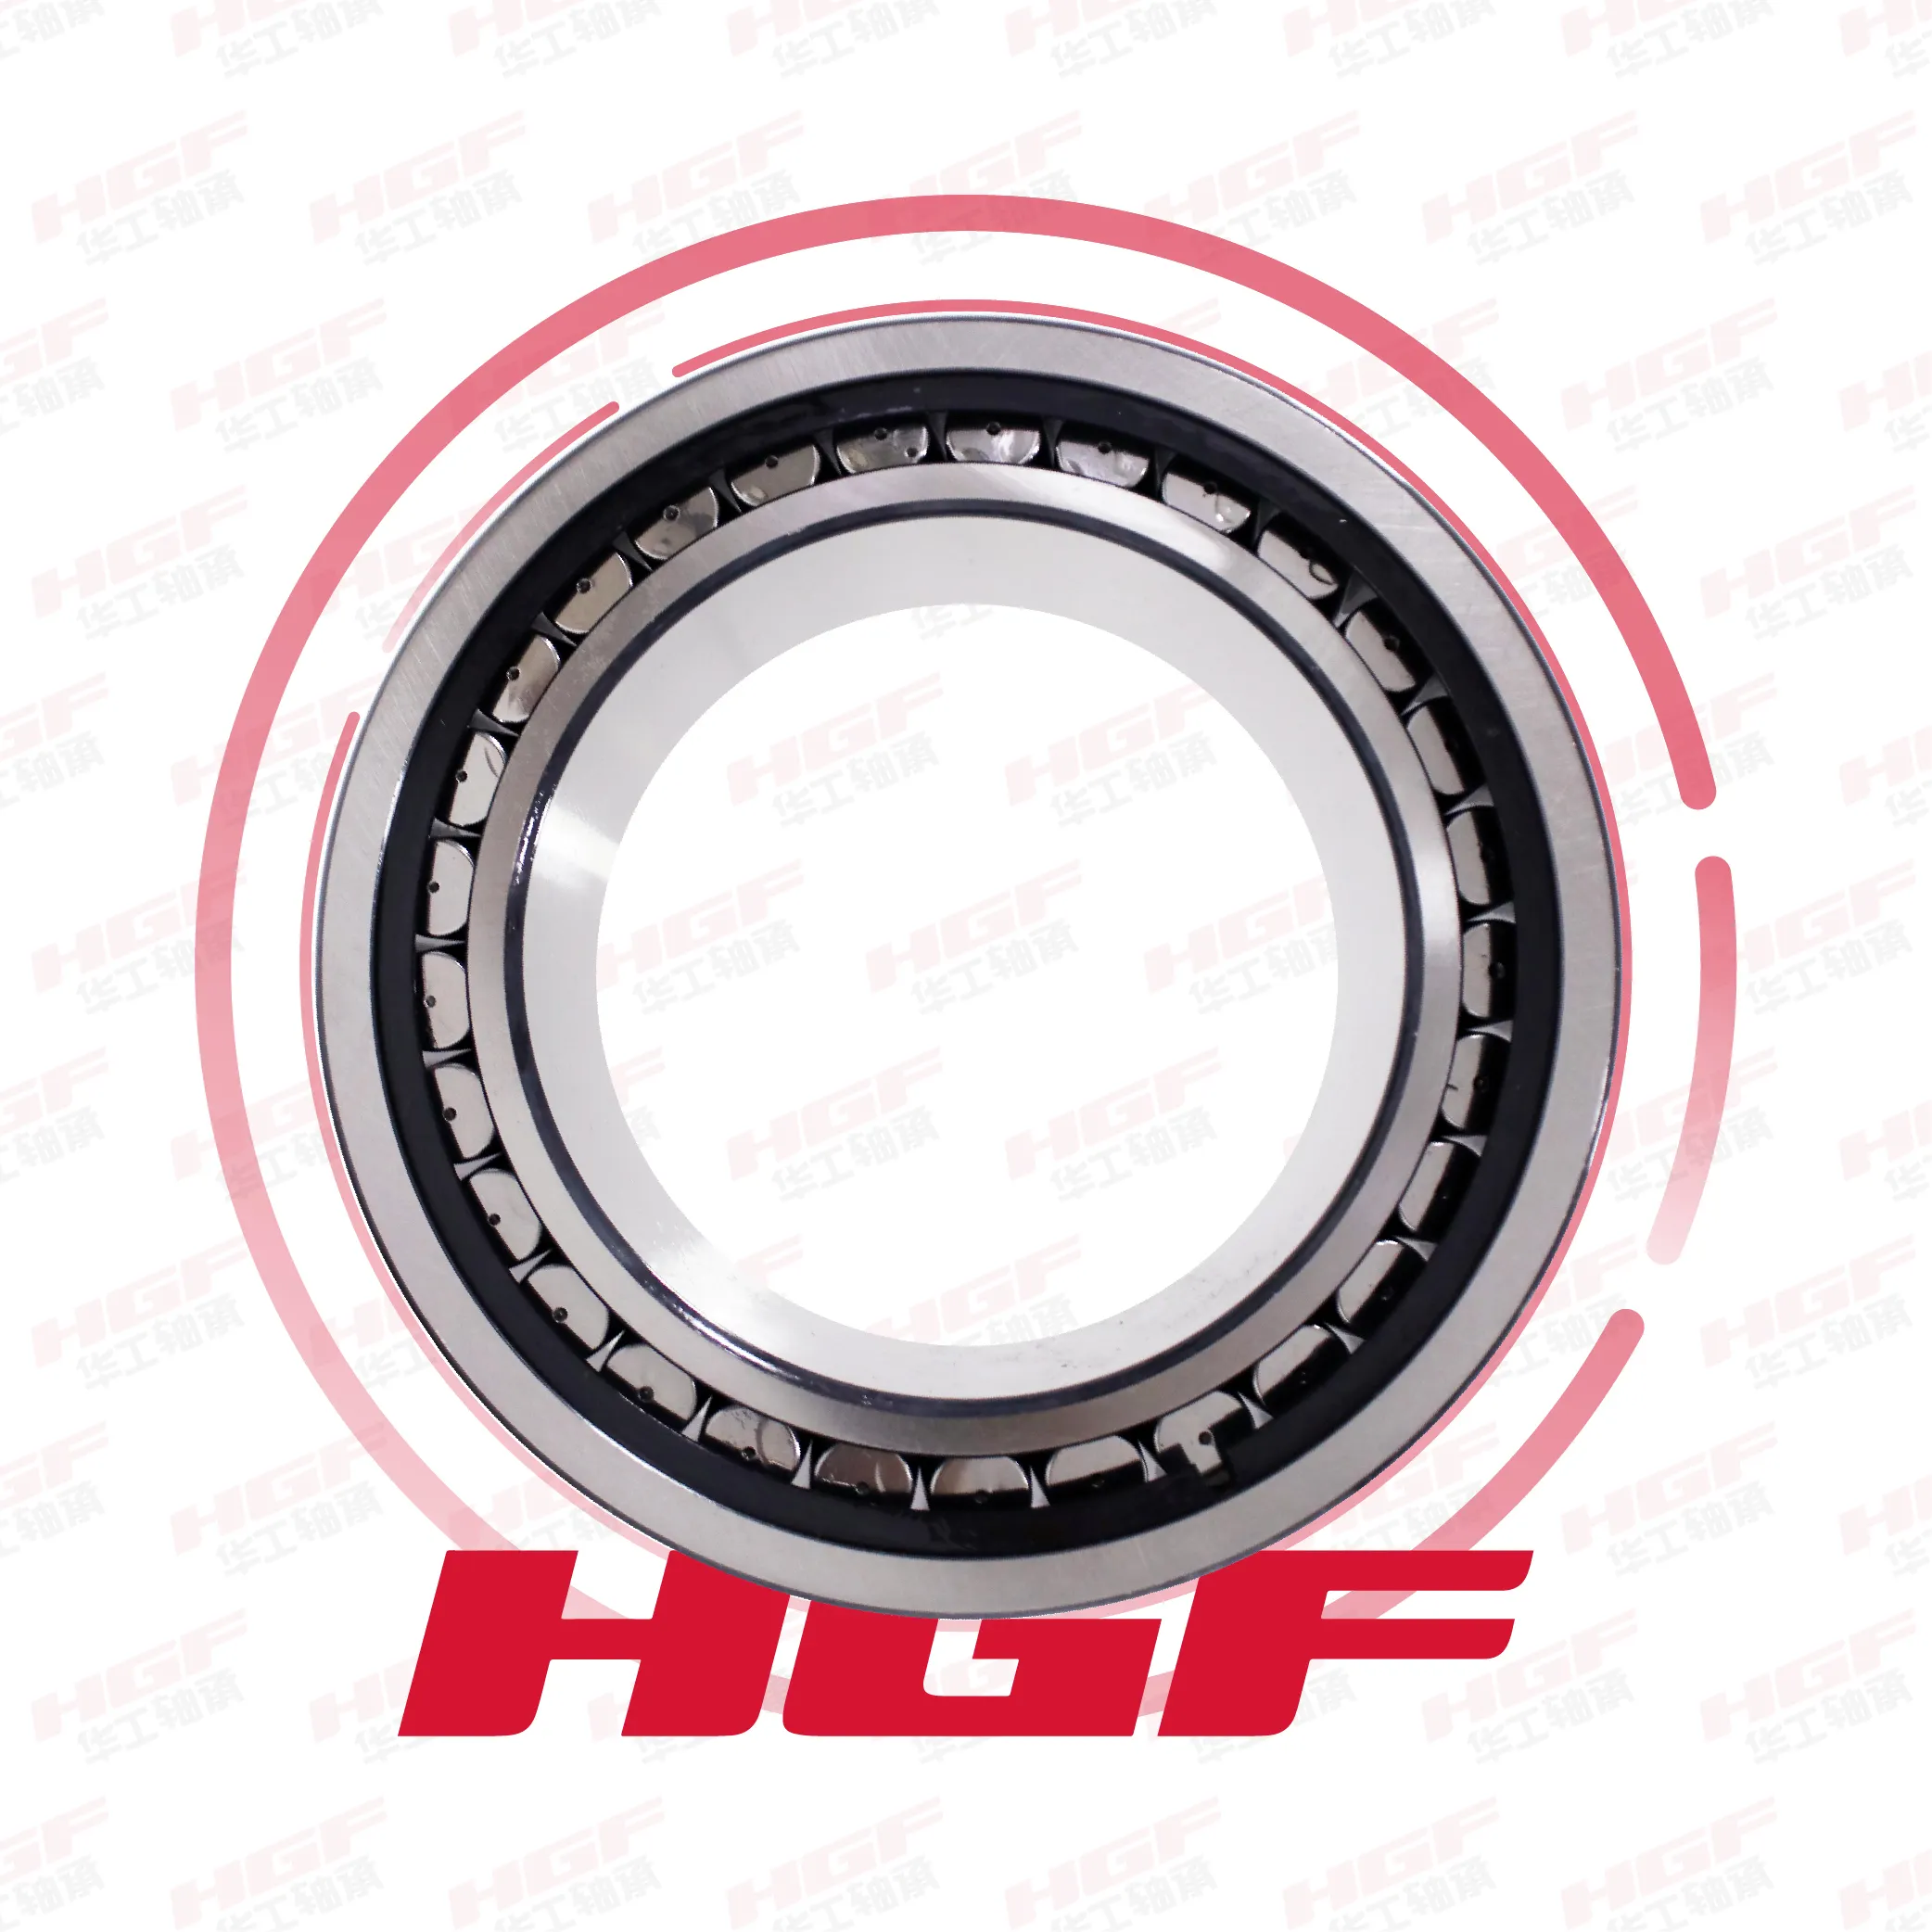 HGF Original cpm2439 fc3246168 fcd 7296290 635194 Four Row Cylindrical Roller Bearing